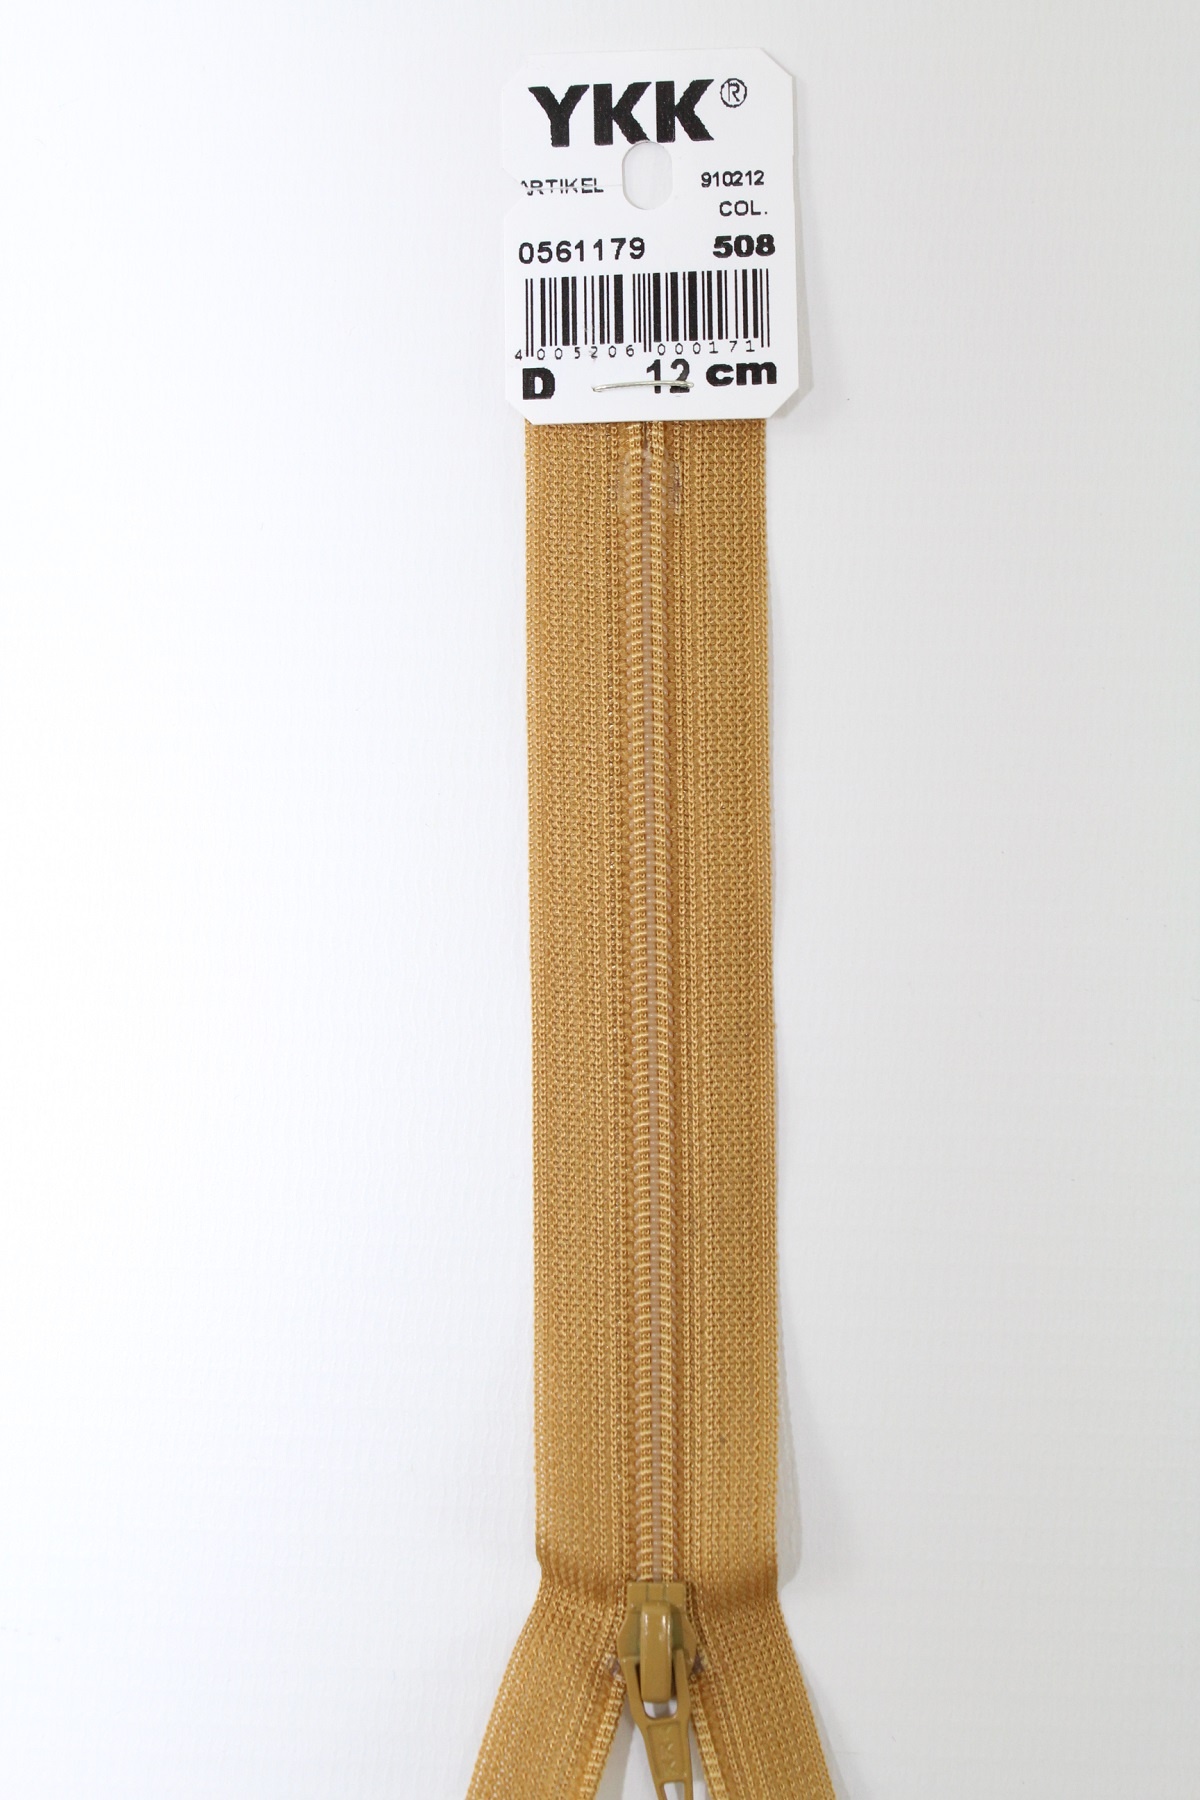 YKK-Reissverschluss 12cm-60cm, nicht teilbar, goldgelb